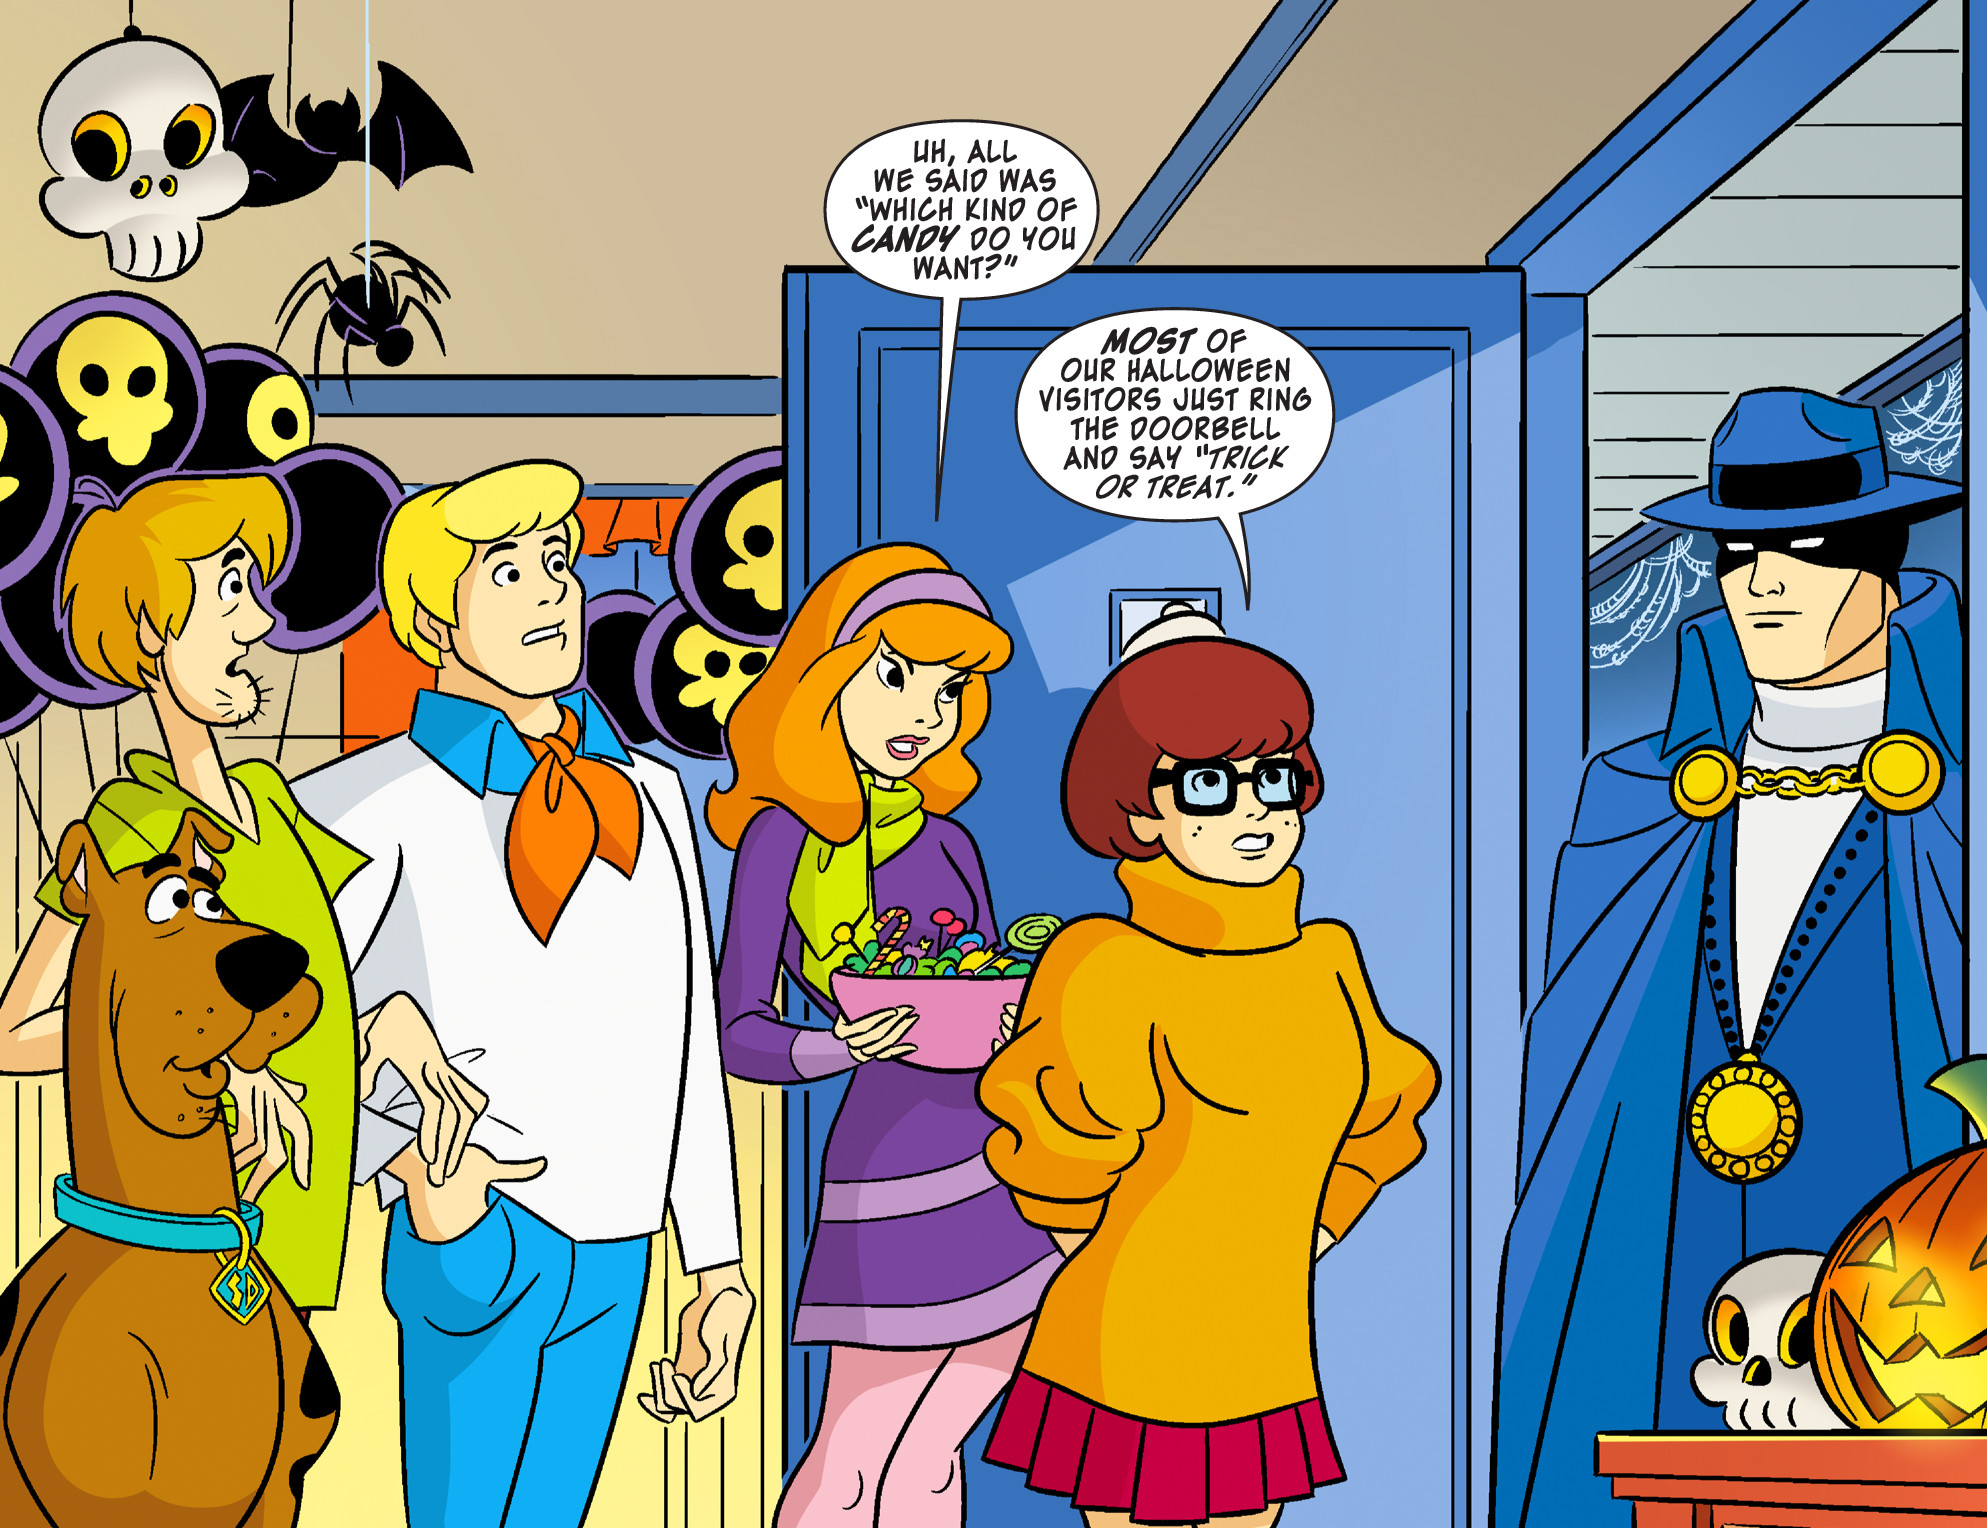 Scooby doo comics. Комикс Скуби Ду. Scooby Doo Team. Комиксы Скуби Ду в реальной жизни. Scooby Doo Comics read.